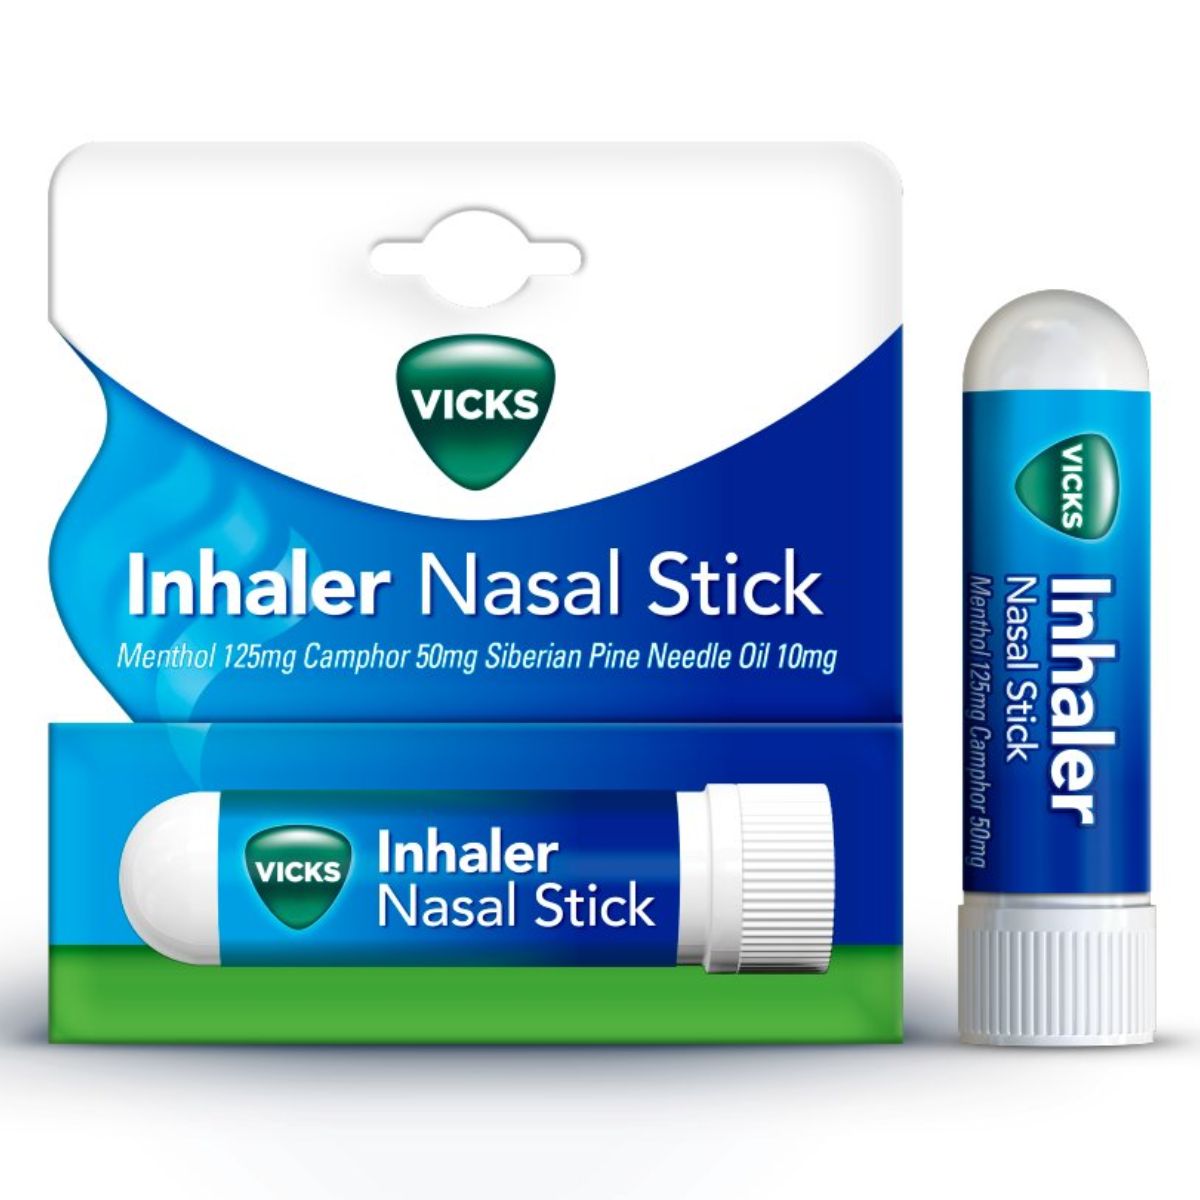 Vicks inhaler nasal stick.